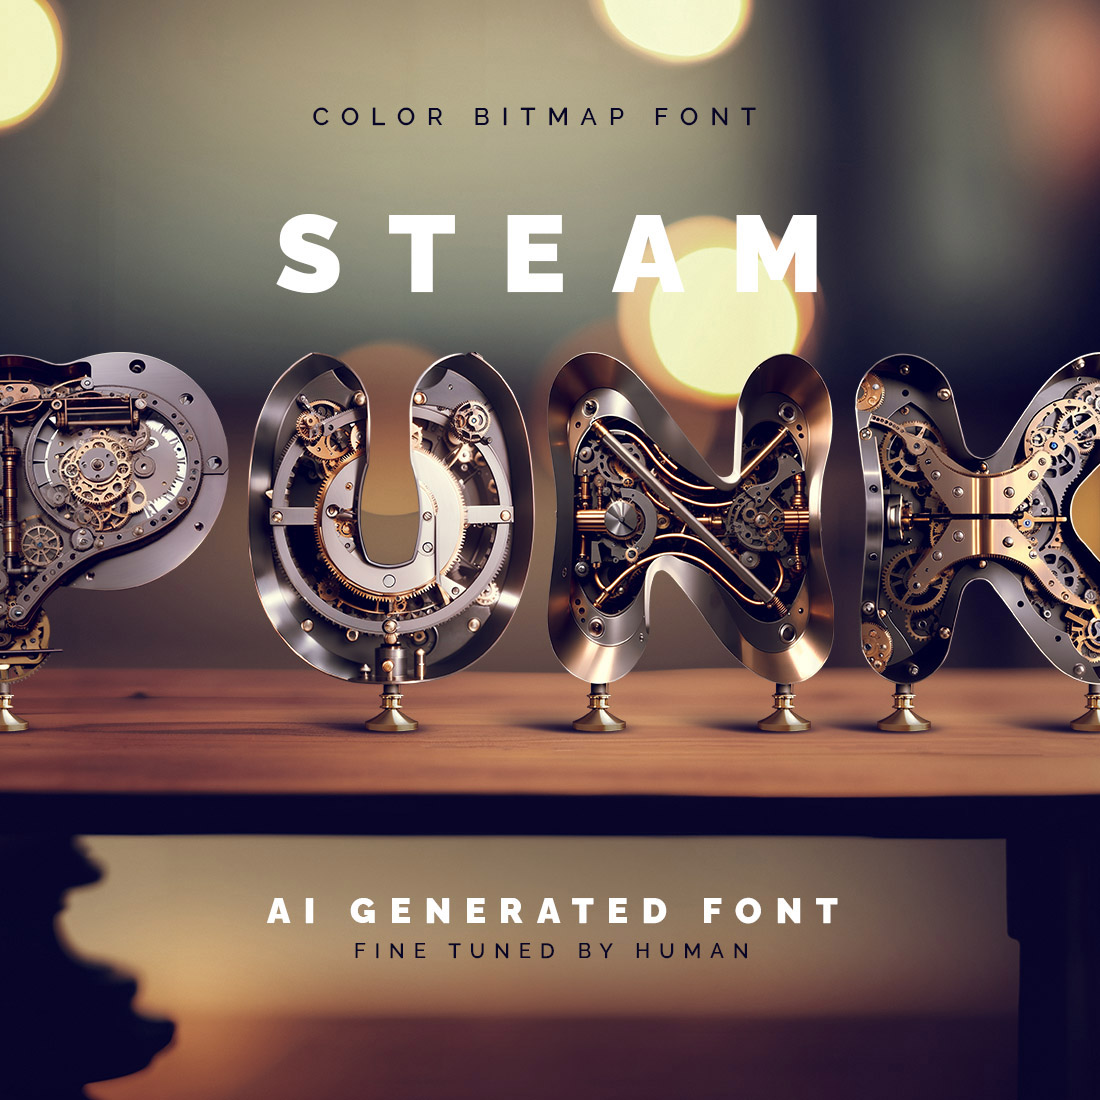 SteampunkAi - Color Bitmap Font cover image.